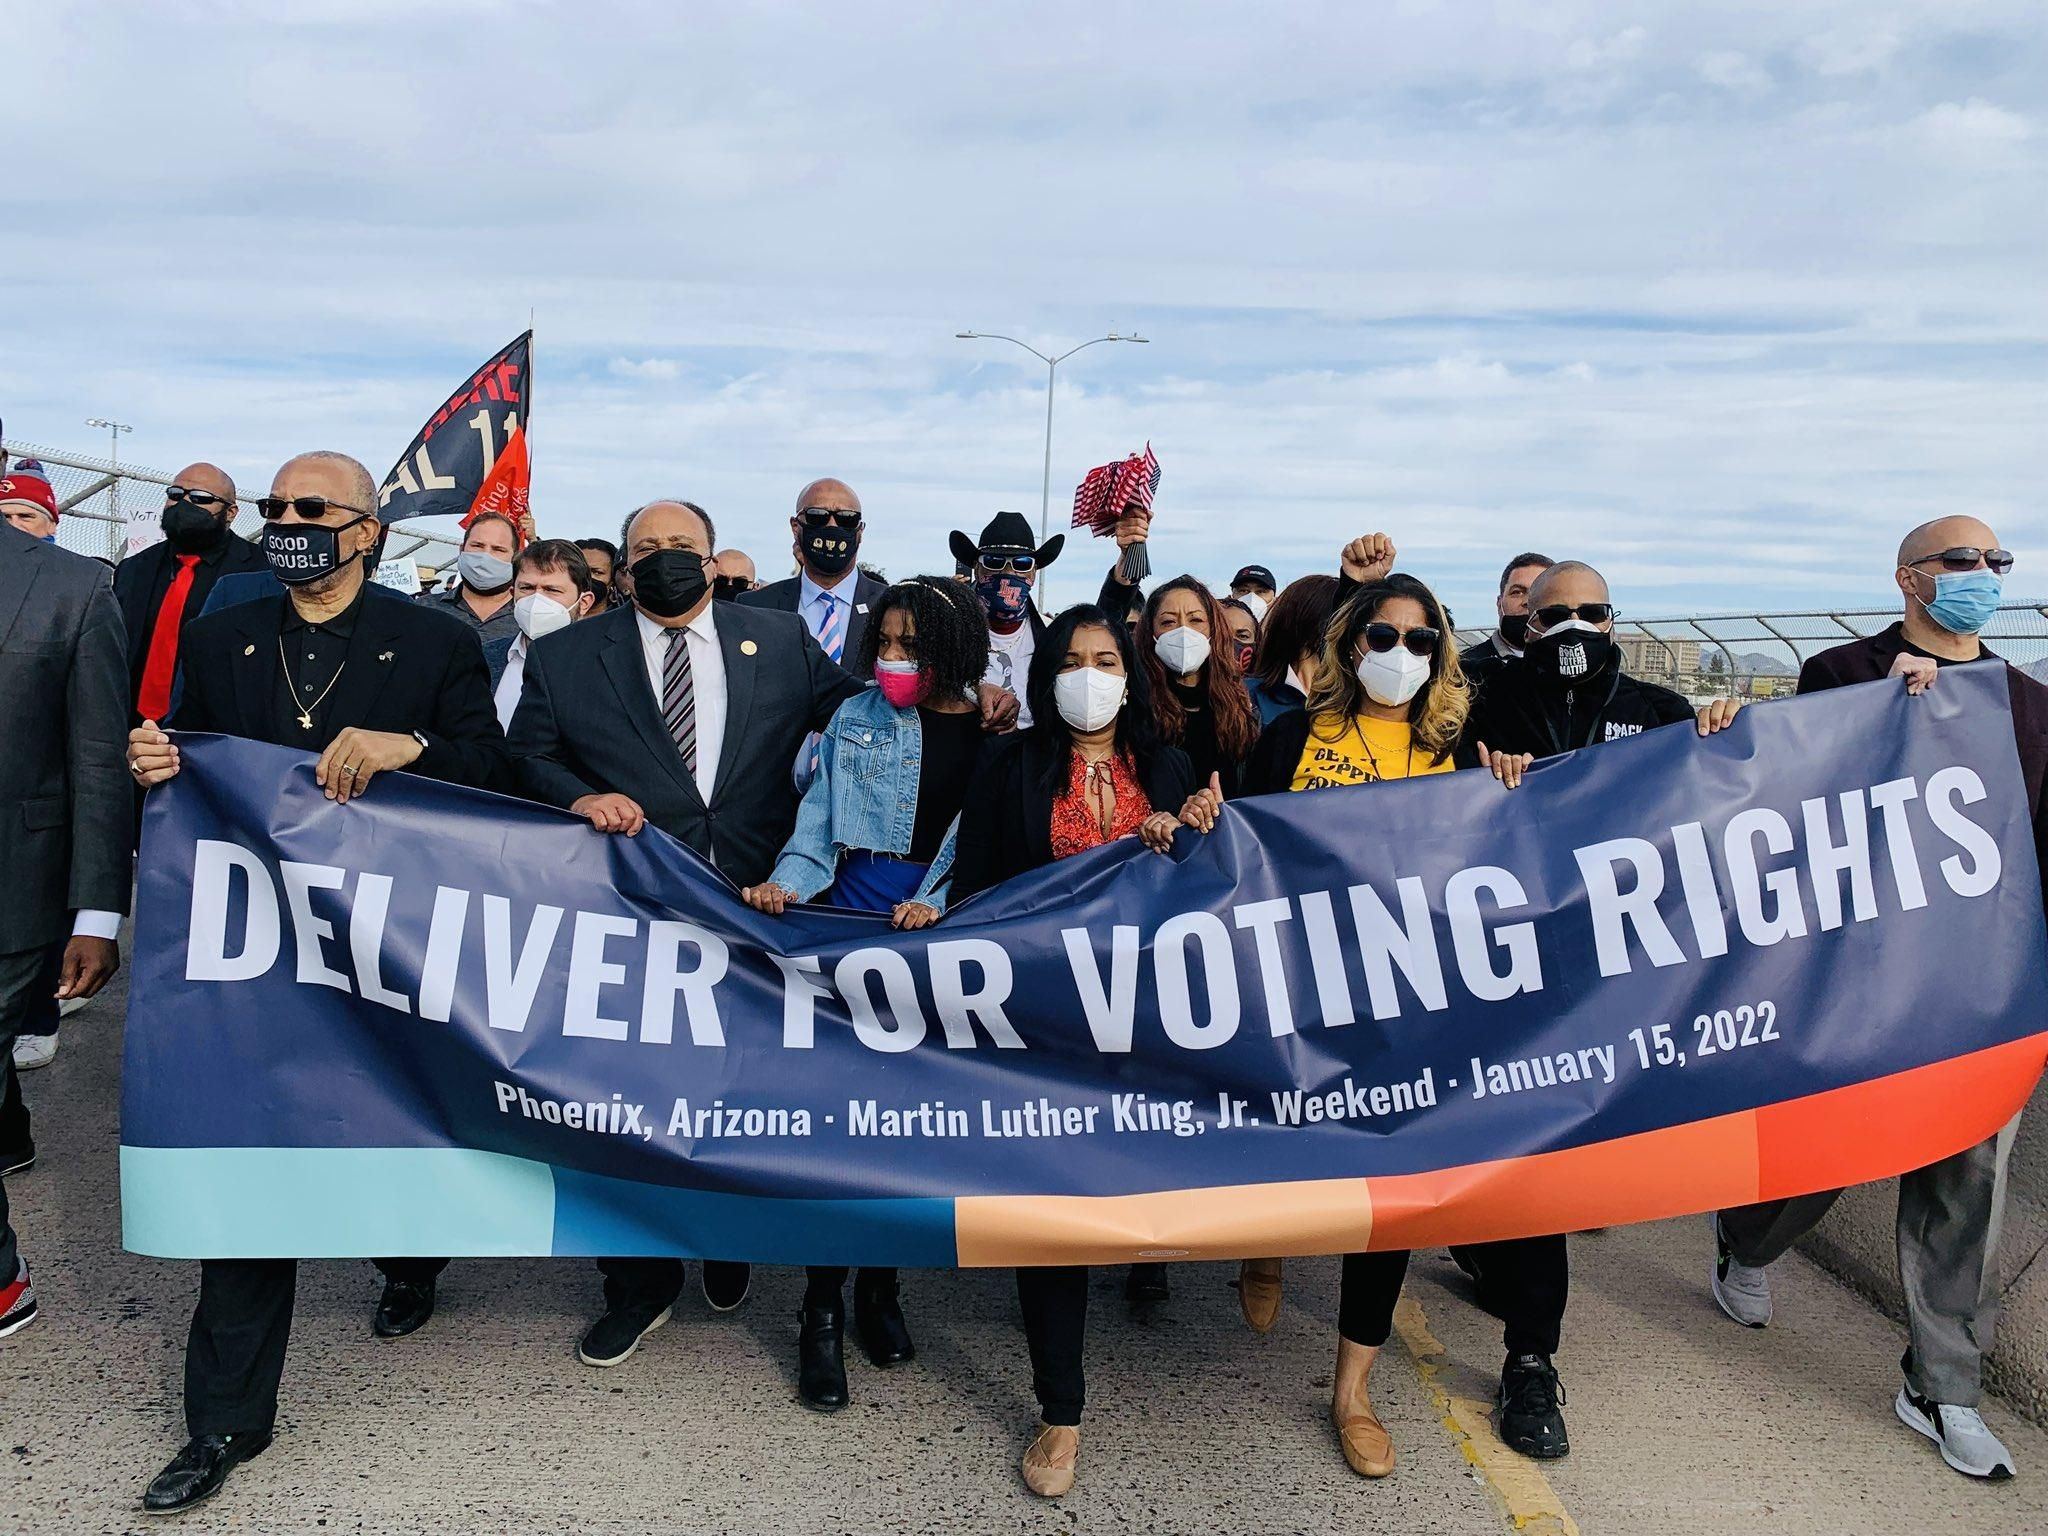 Voting rights advocates march in Arizona